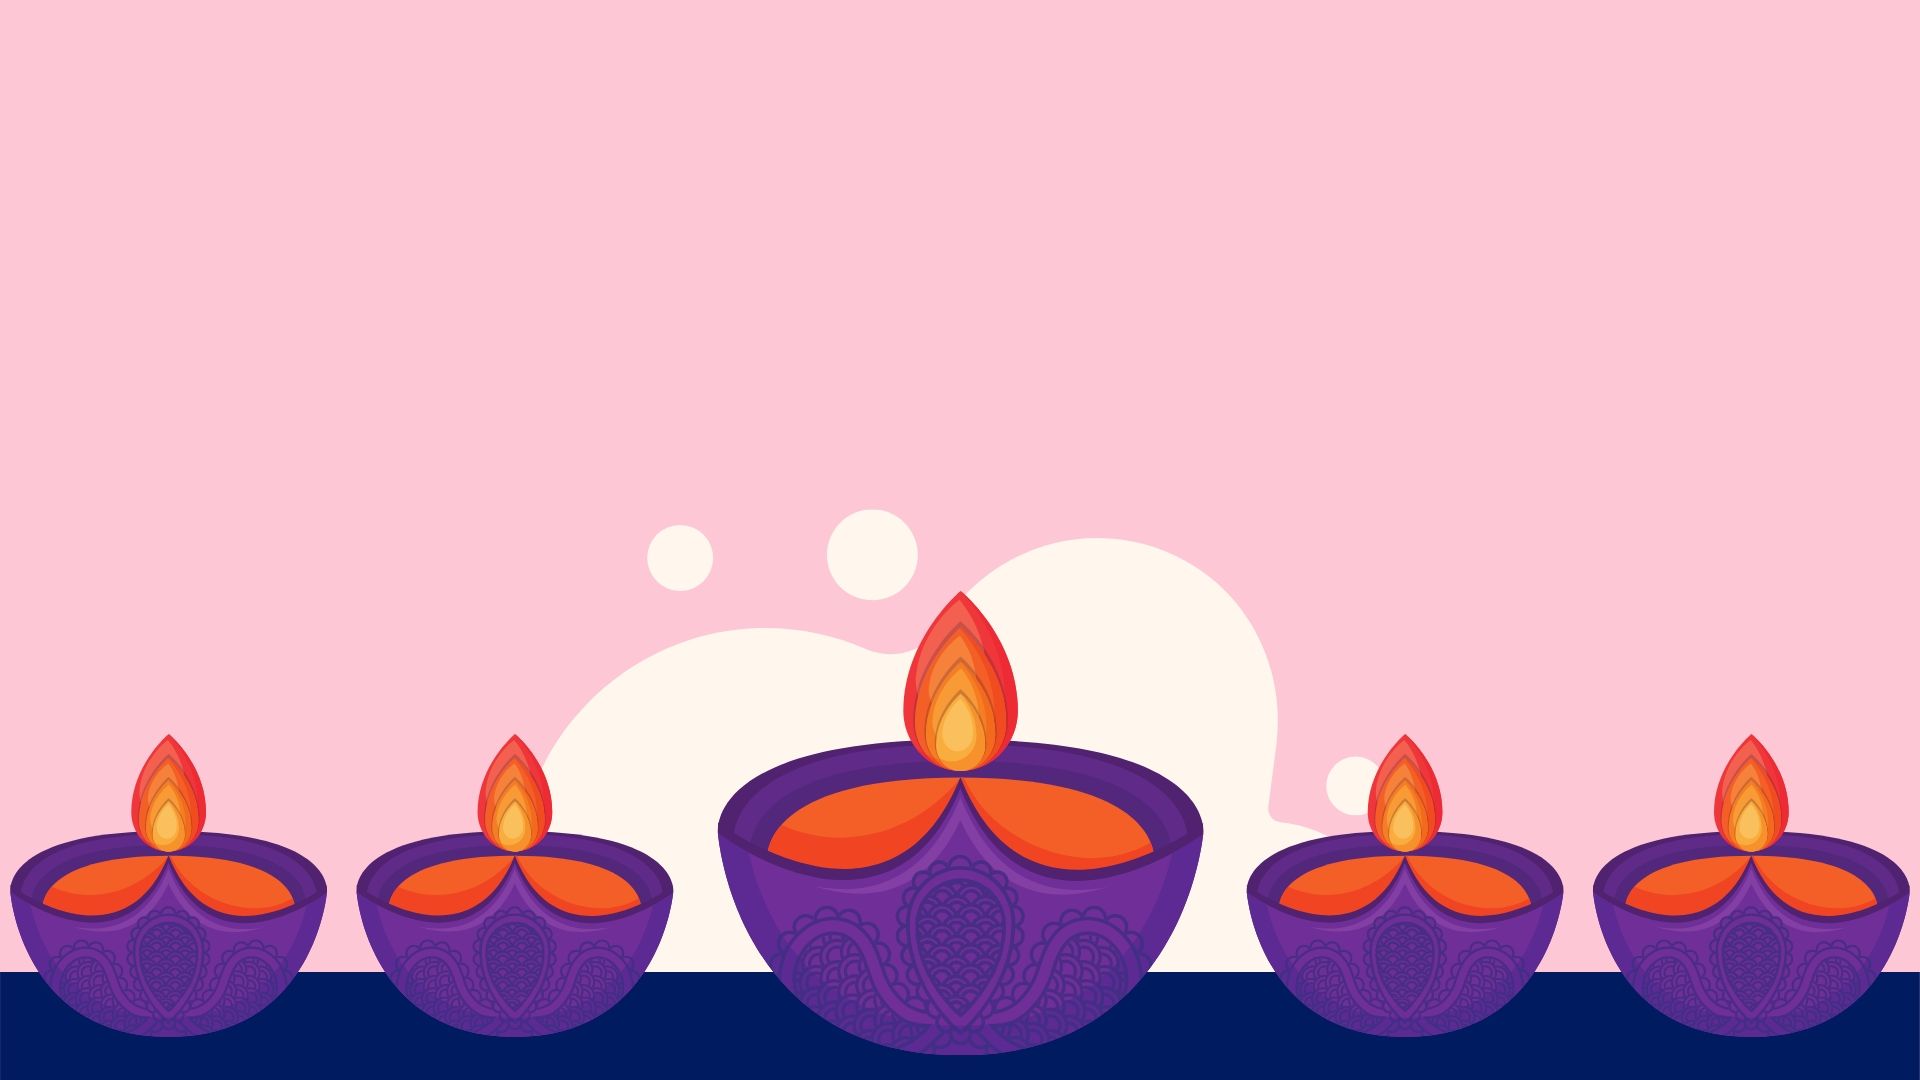 Happy Diwali 2021 HD Image, Diwali Whatsapp Image Celebrat, Daily Celebrations Ideas, Holidays & Festivals